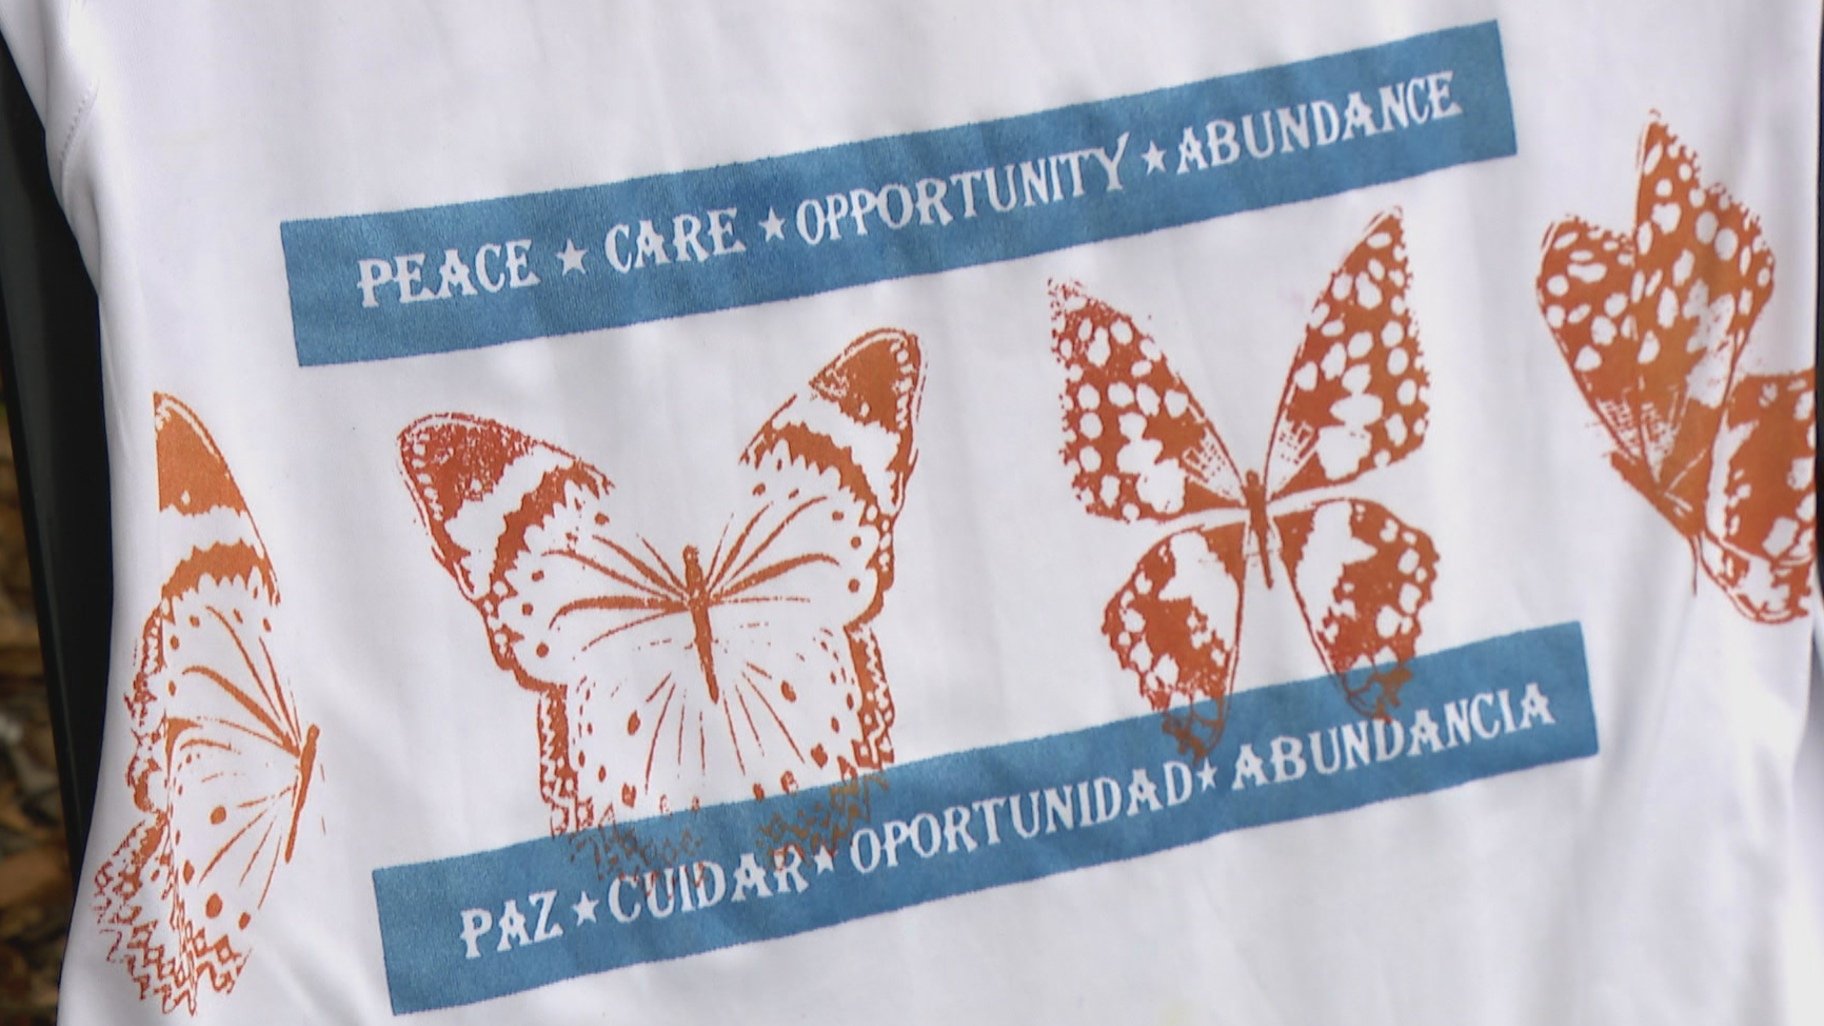 Solicitante de asilo venezolano diseña logotipo para ayudar a recaudar dinero para grupo que ayuda a migrantes |  Entradas latinas |  Noticias de Chicago